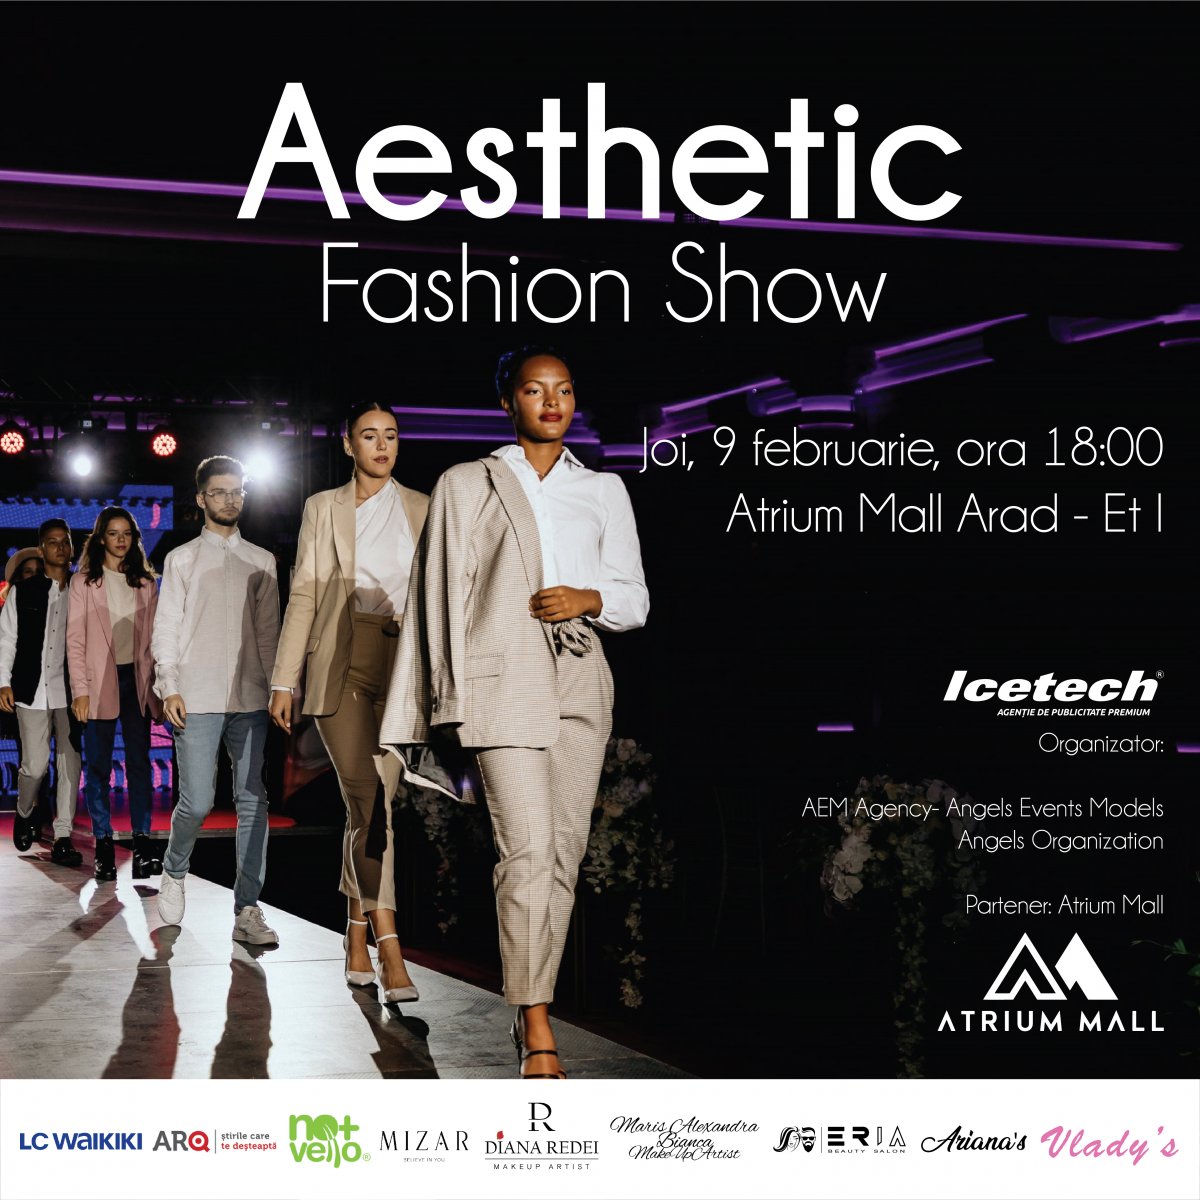 Aesthetic Fashion Show la Atrium Mall Arad